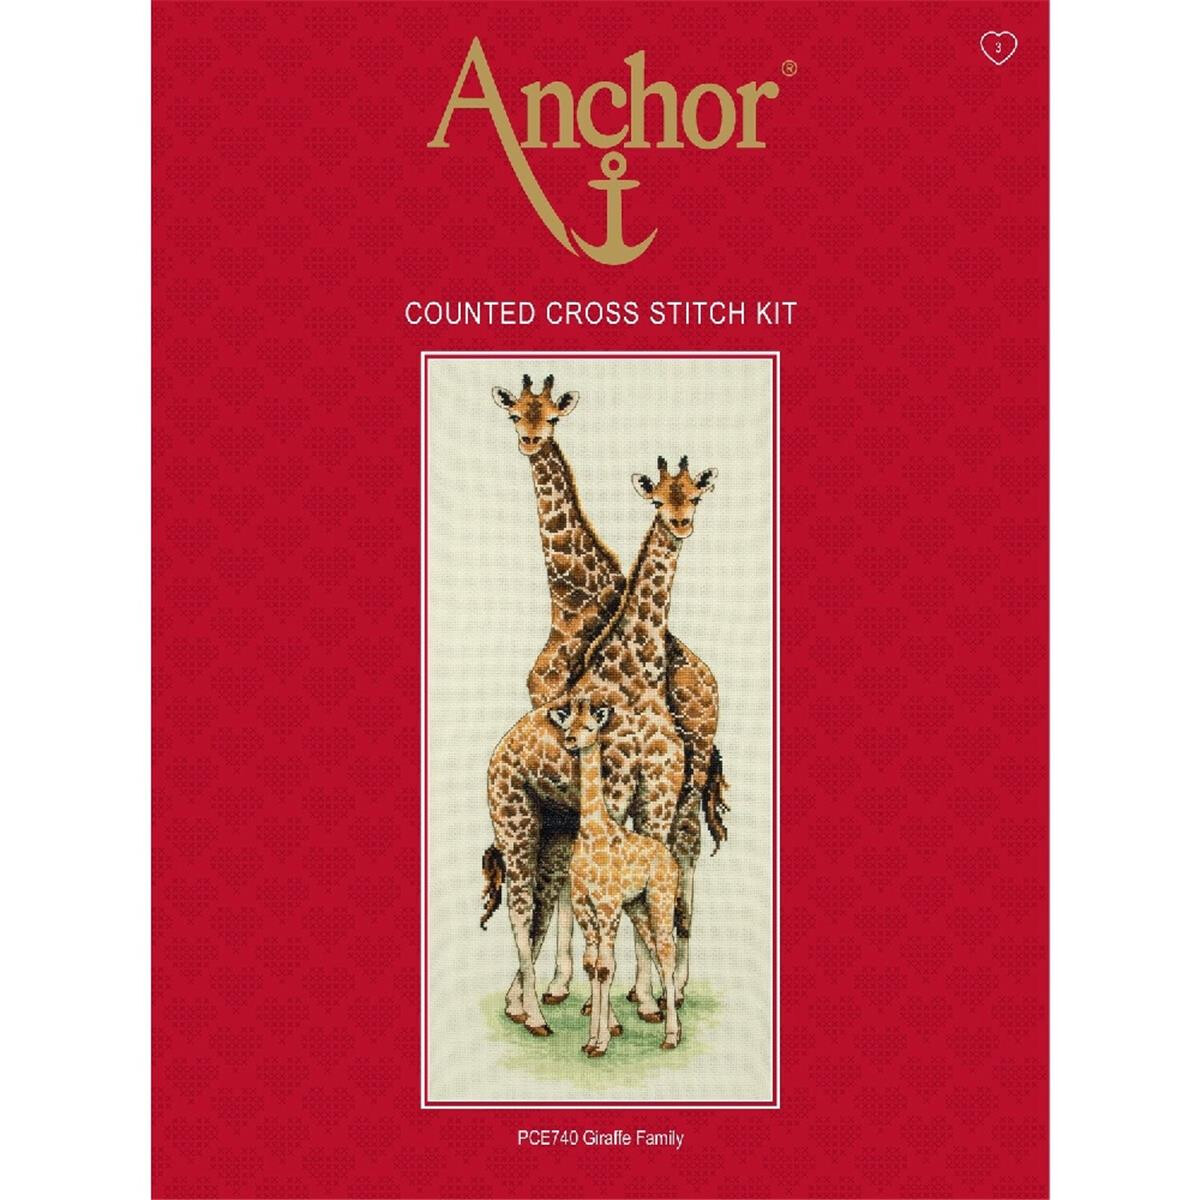 Anchor counted Cross Stitch kit "Giraffe...